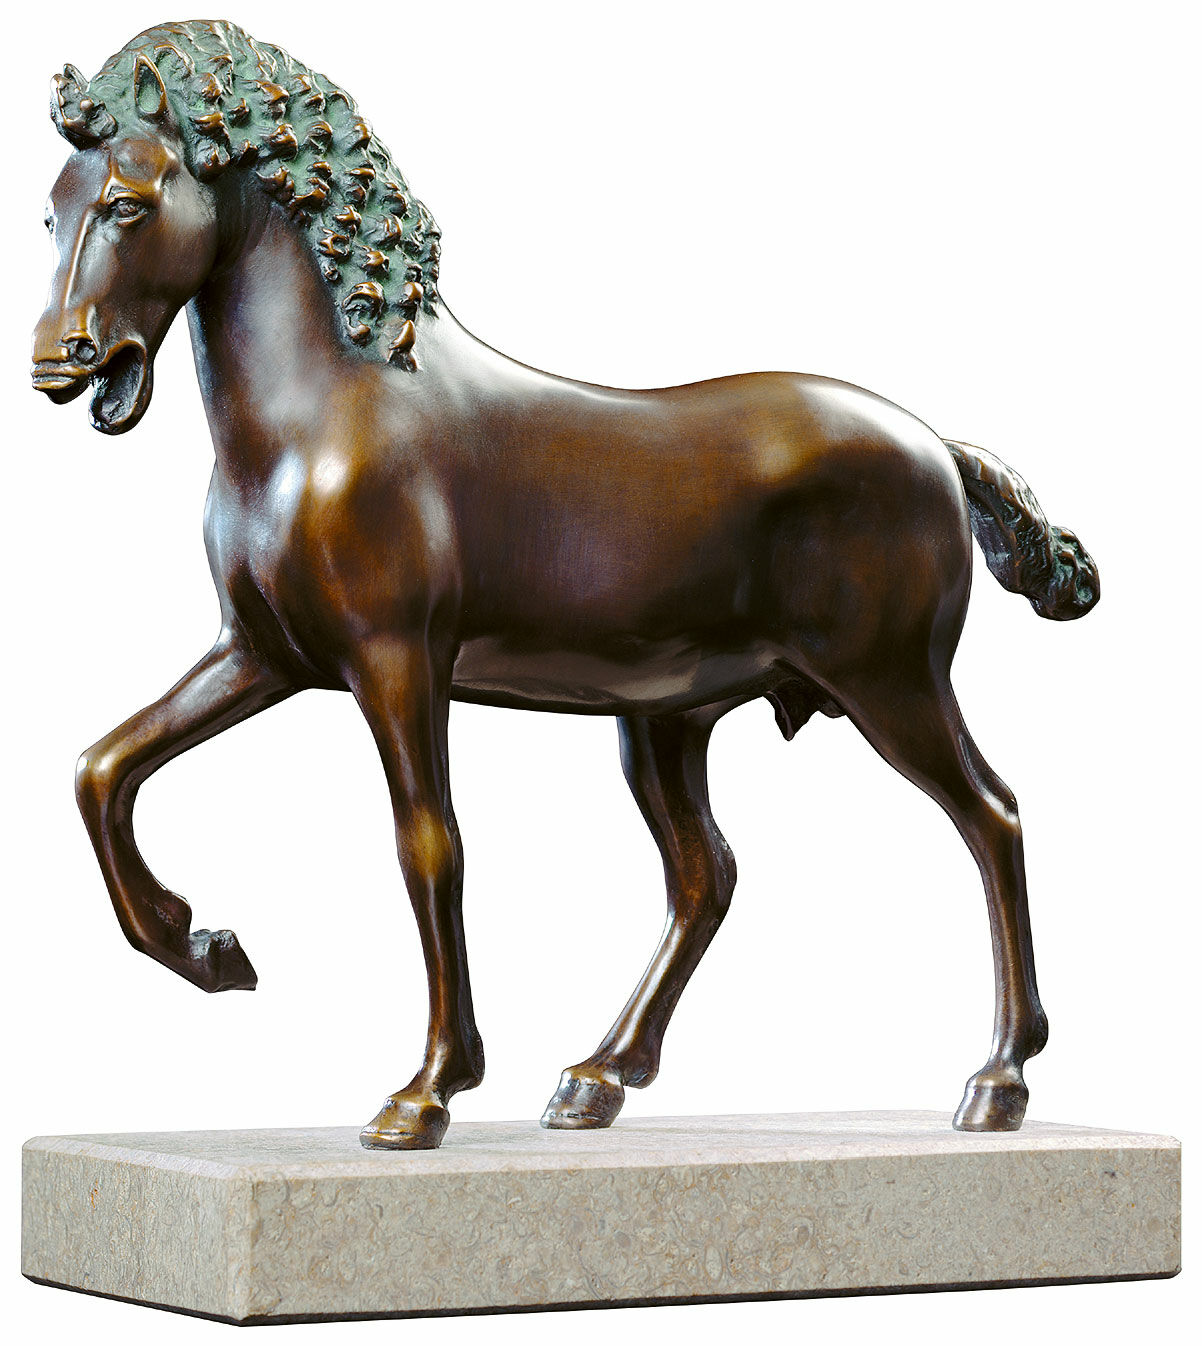 Skulptur "Cavallo" (um 1492), Bronze von Leonardo da Vinci